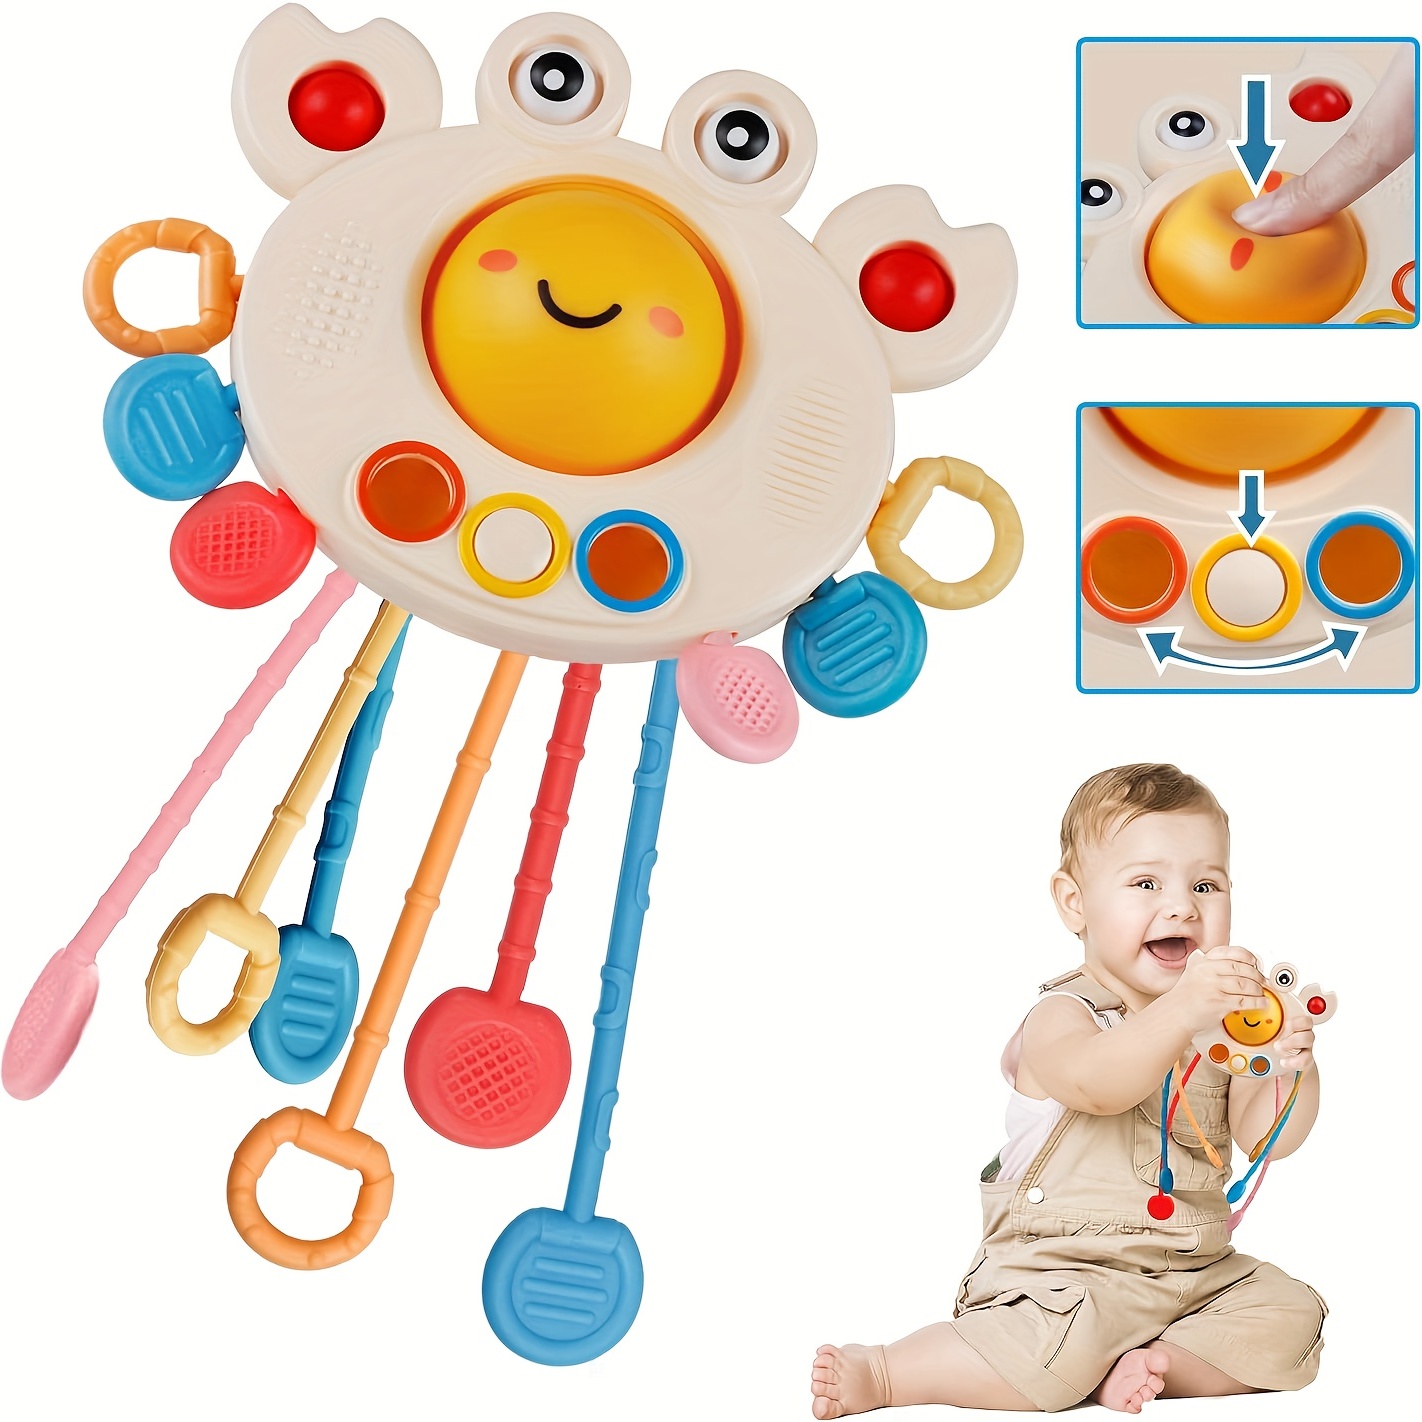  URMYWO Juguetes de espejo para el tiempo de barriga, juguetes 3  en 1 para bebés de 0 a 6 a 12 meses, juguetes Montessori sensoriales para  bebés recién nacidos con bufandas